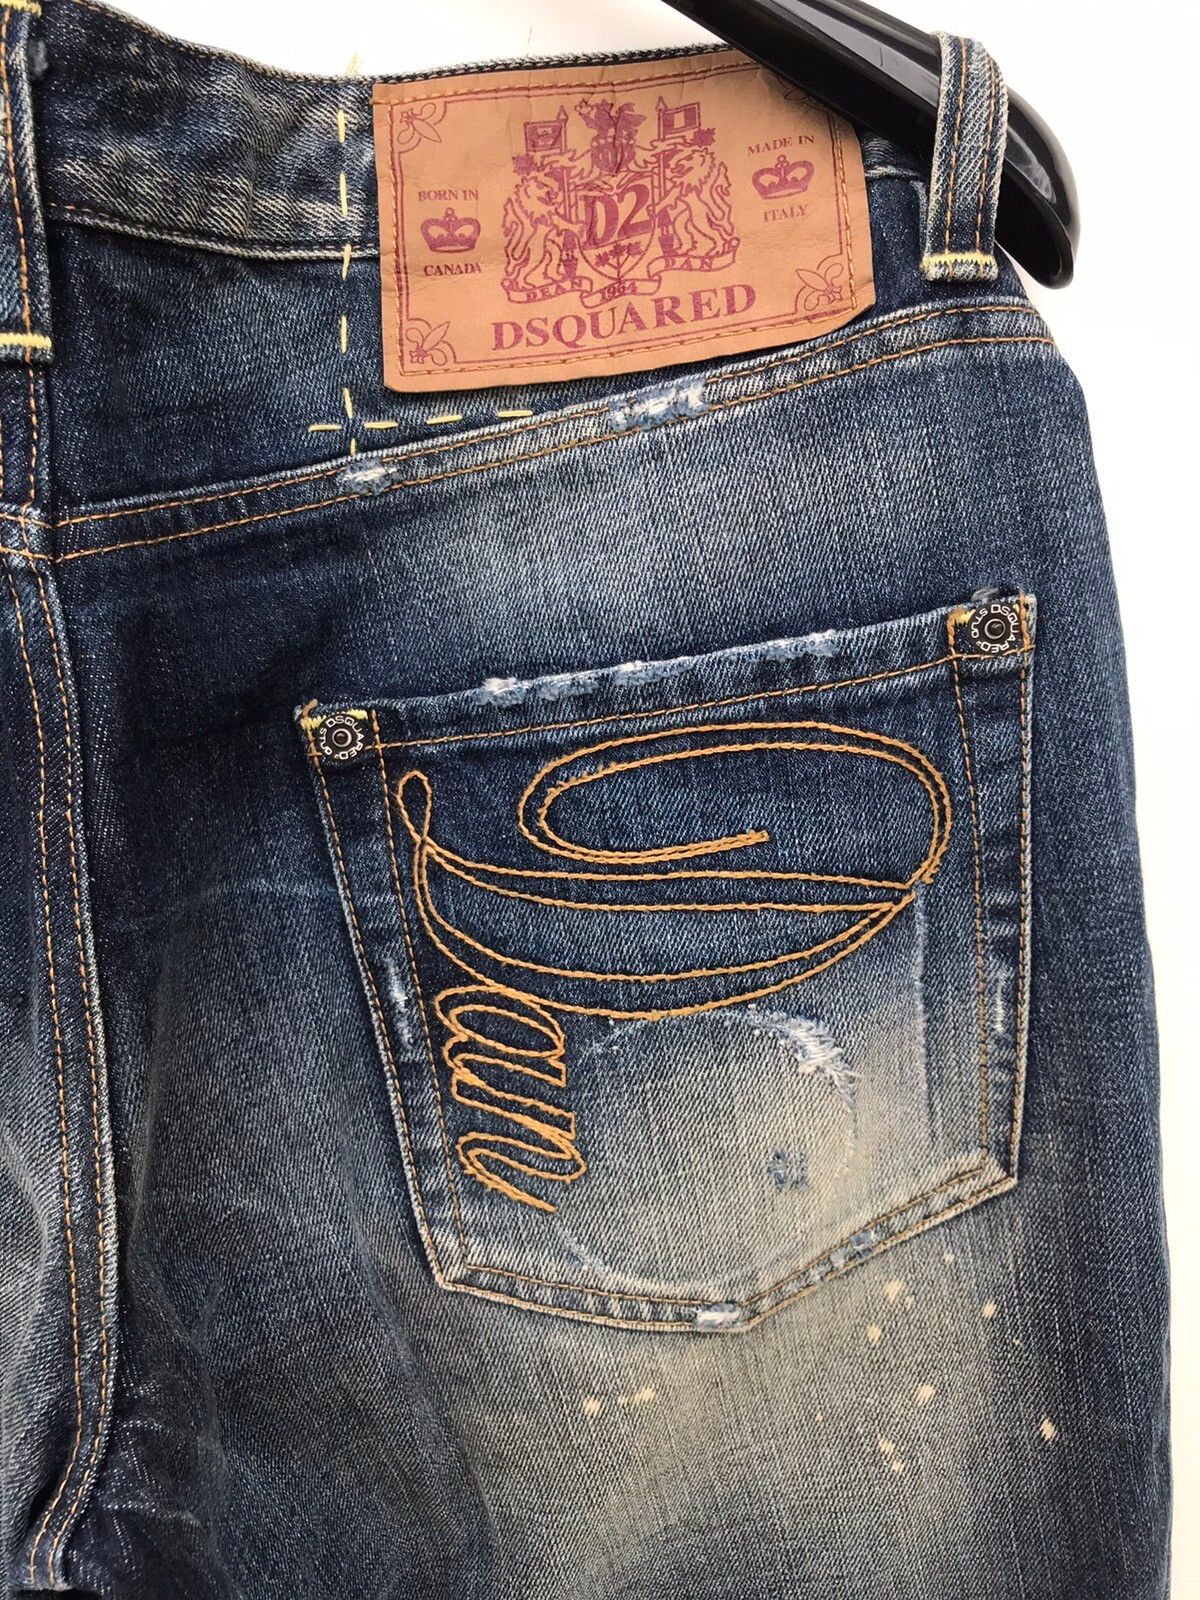 Vintage Dsquared2 Denim Jeans Rare Design - 4